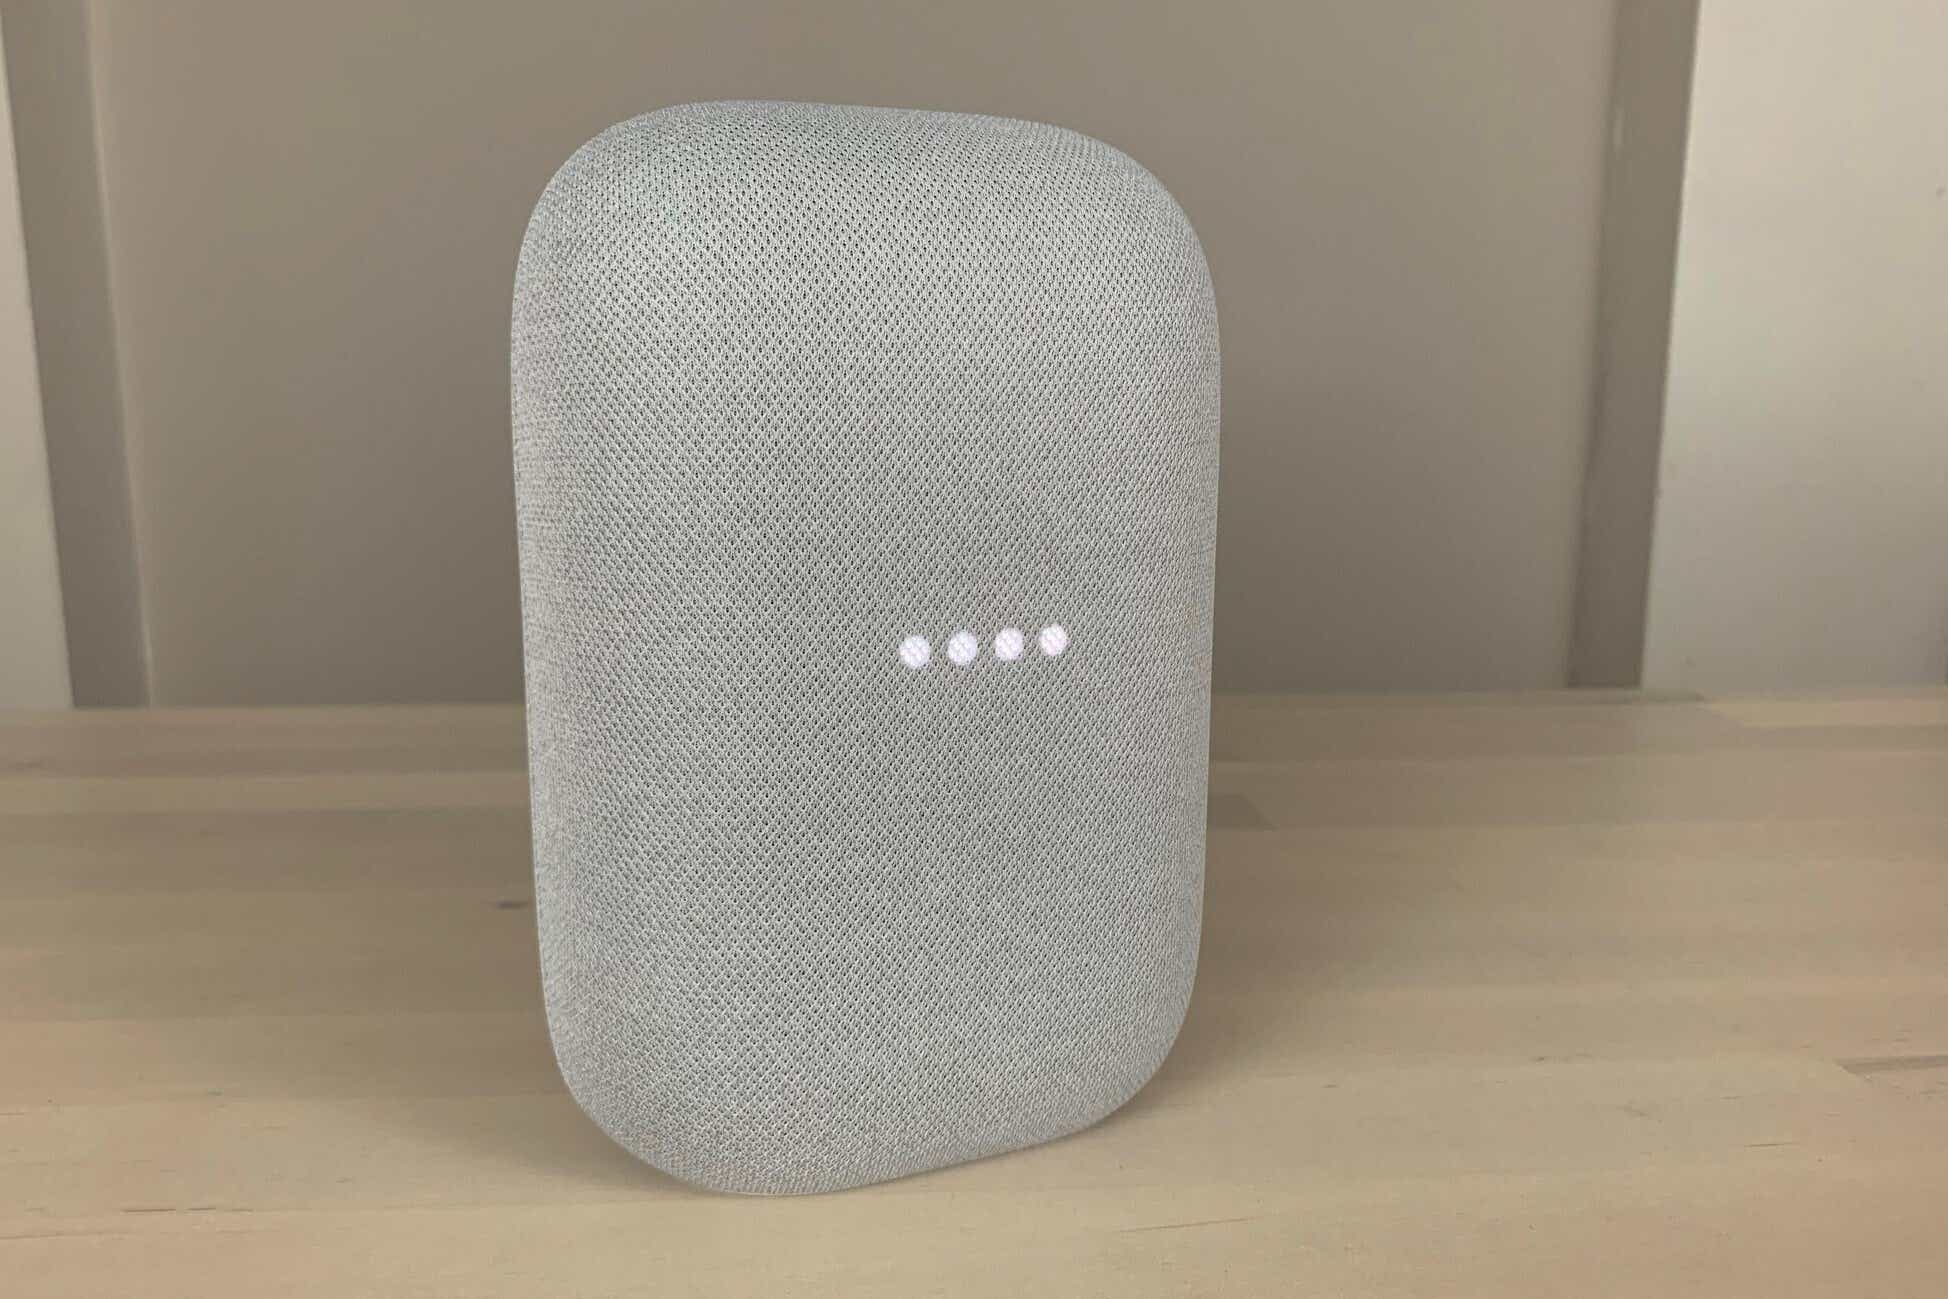 Best Google Assistant smart speaker: Google Nest Audio